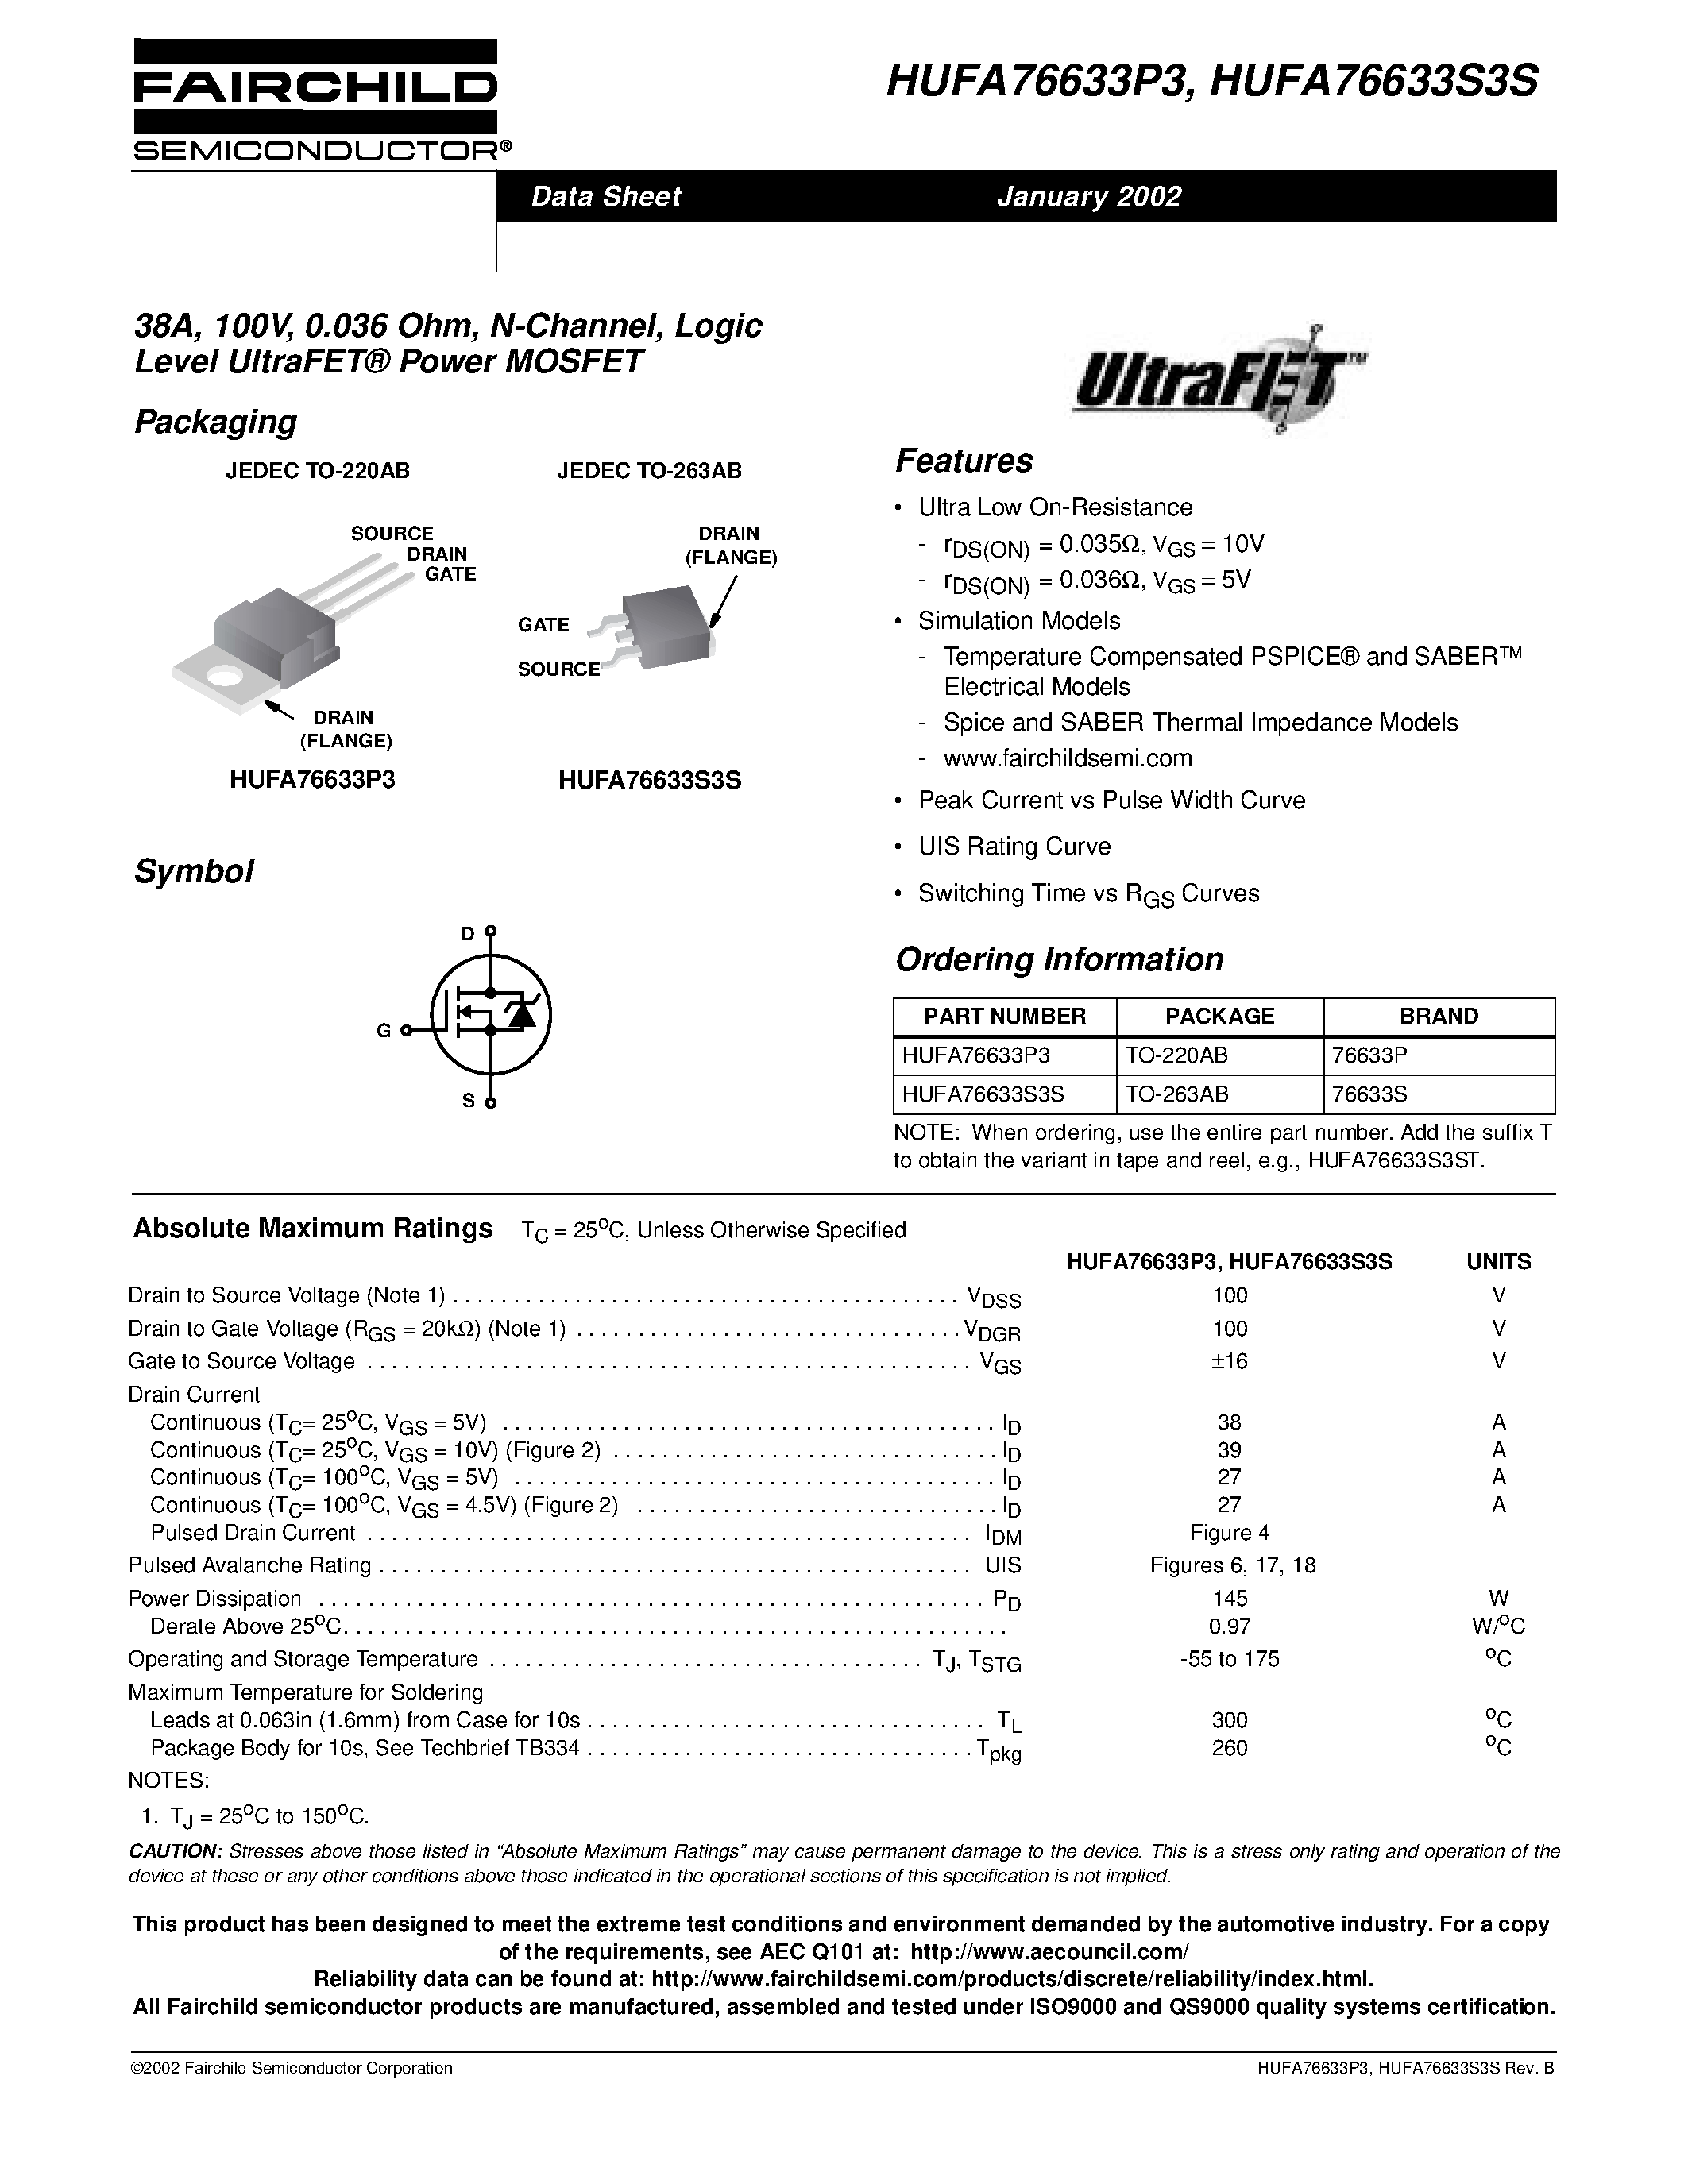 Даташит HUFA76633S3S - 38A/ 100V/ 0.036 Ohm/ N-Channel/ Logic Level UltraFET Power MOSFET страница 1